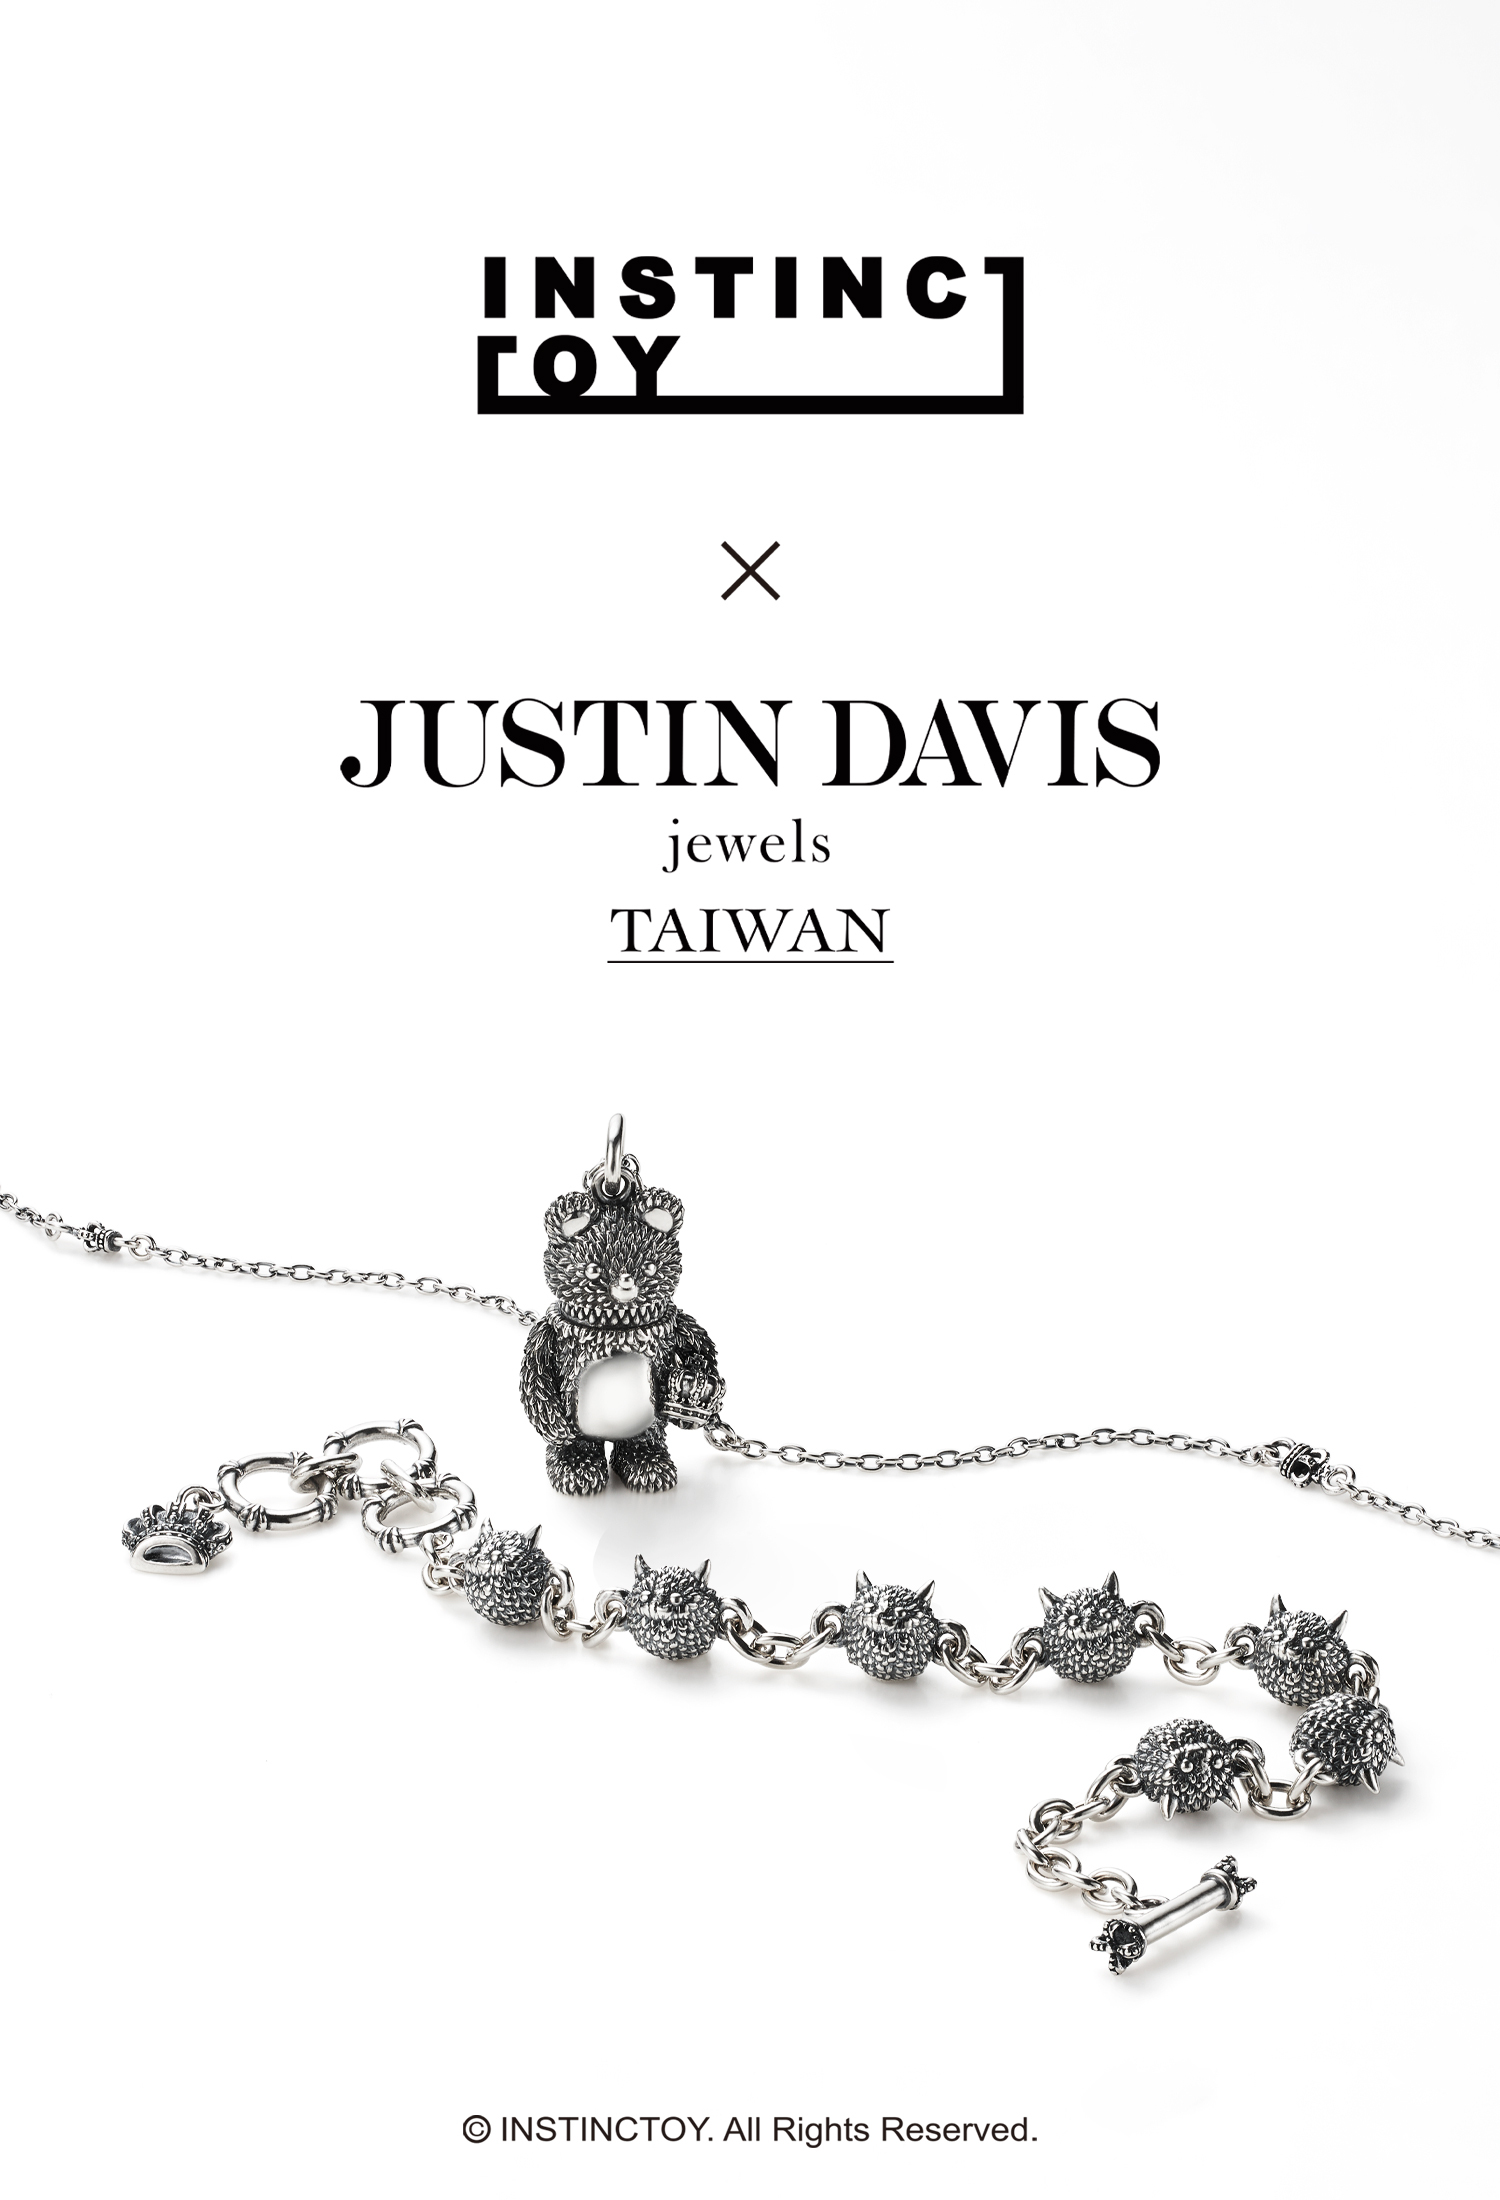 JUSTIN DAVIS TAIWAN